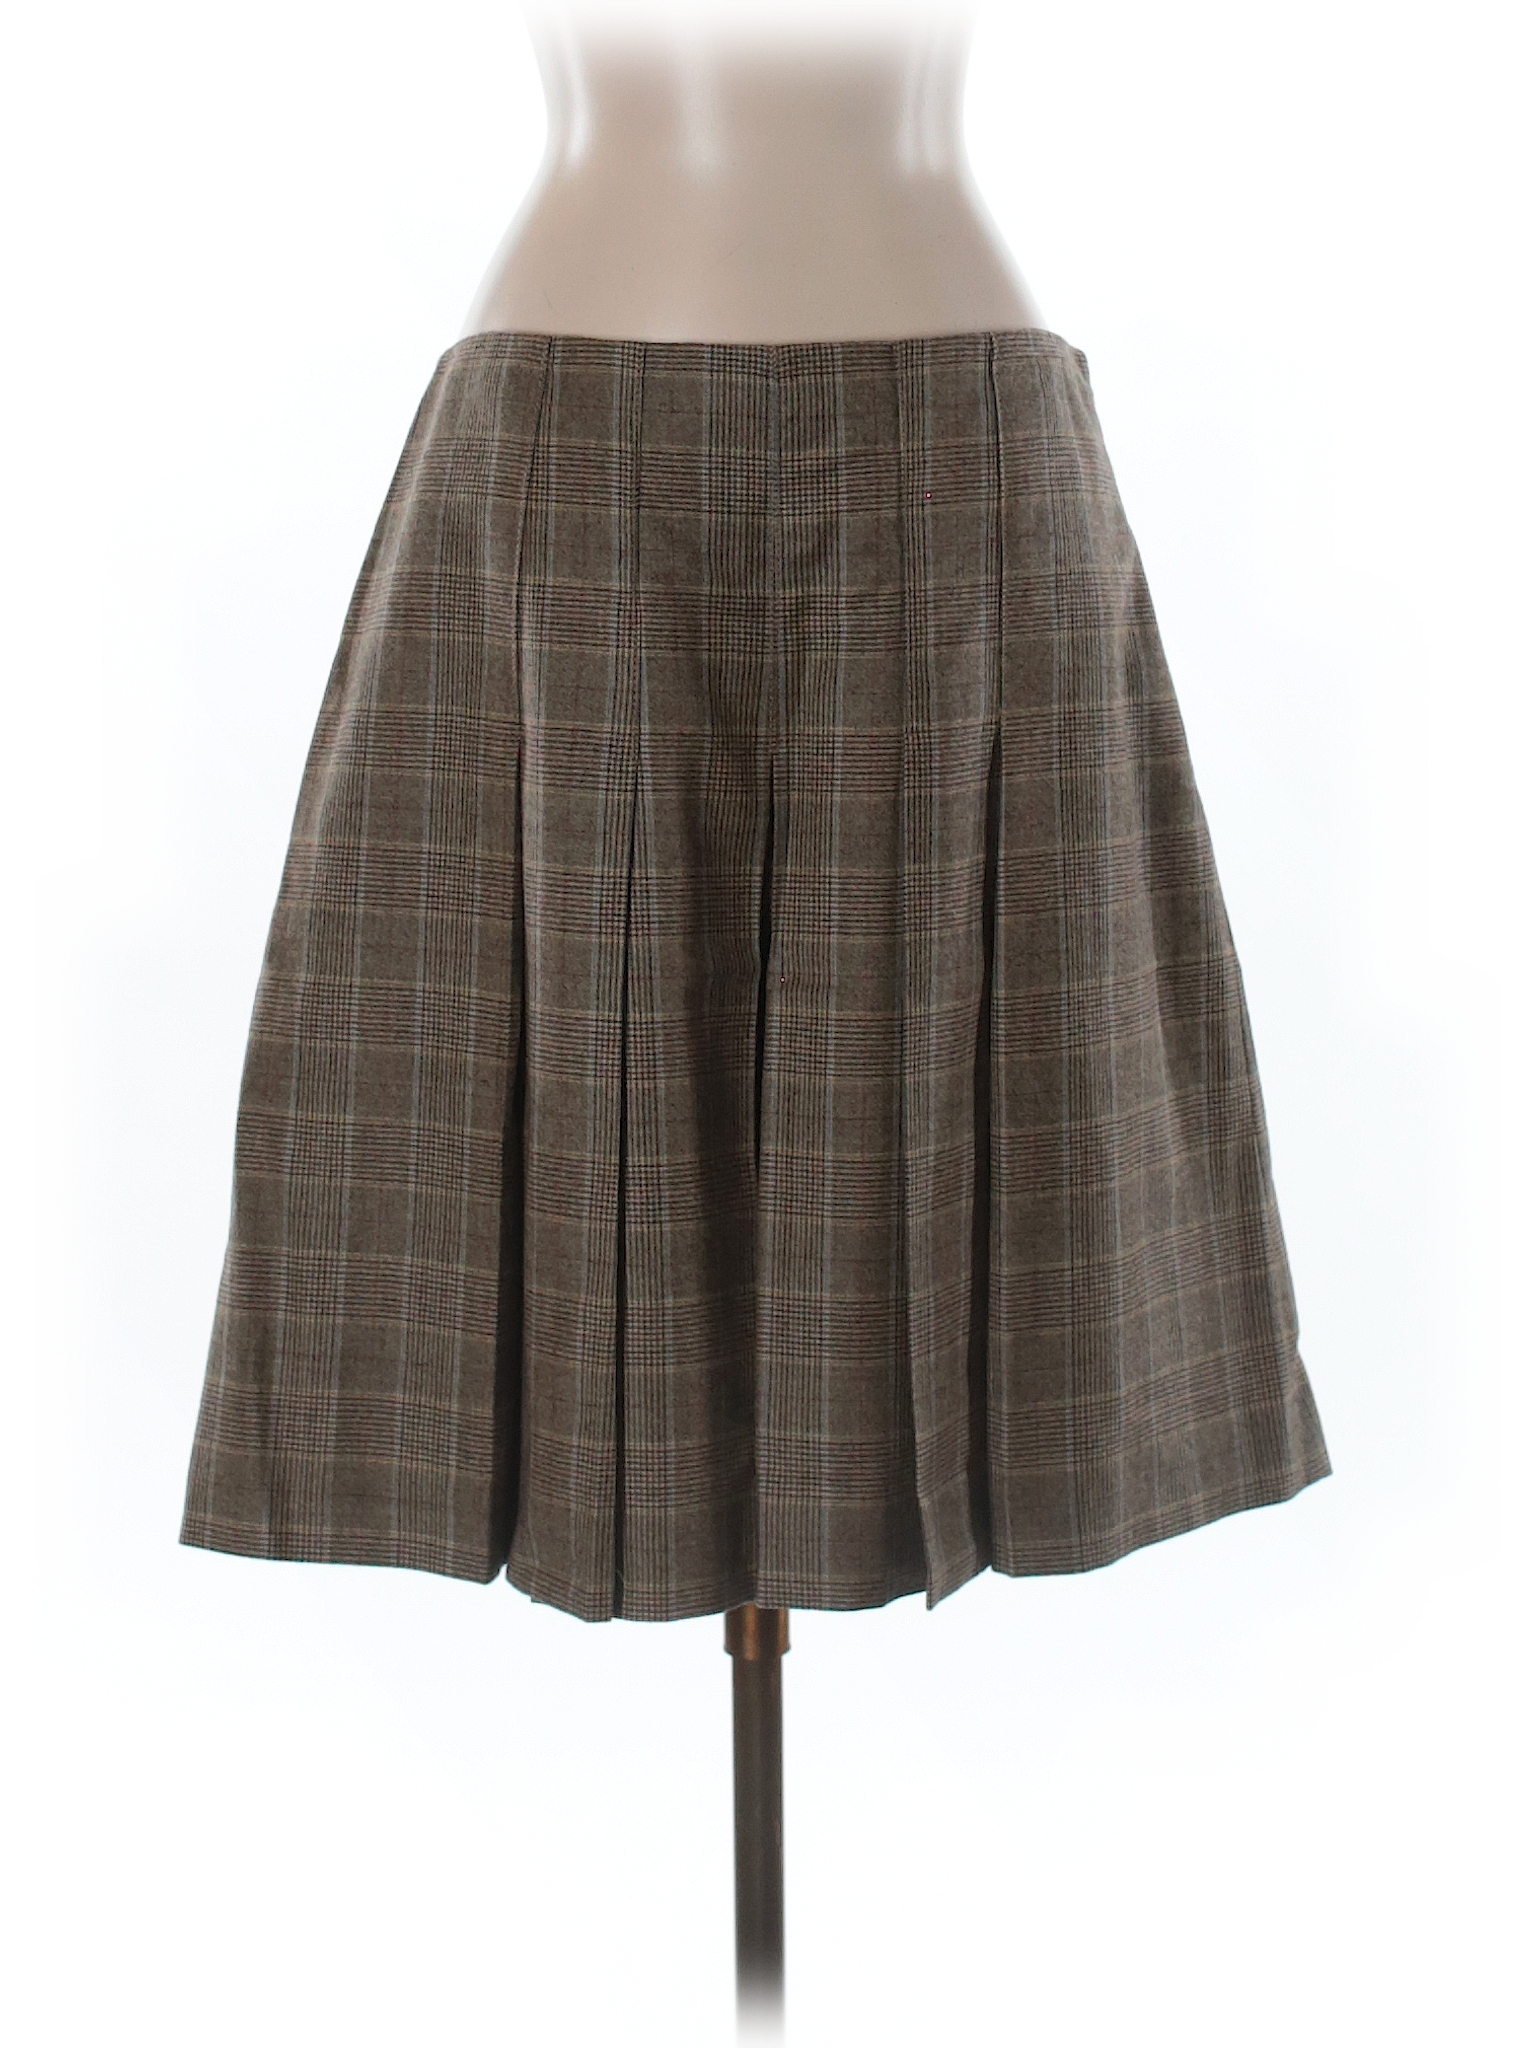 J.Crew 100% Wool Plaid Tan Wool Skirt Size 8 - 76% off | thredUP